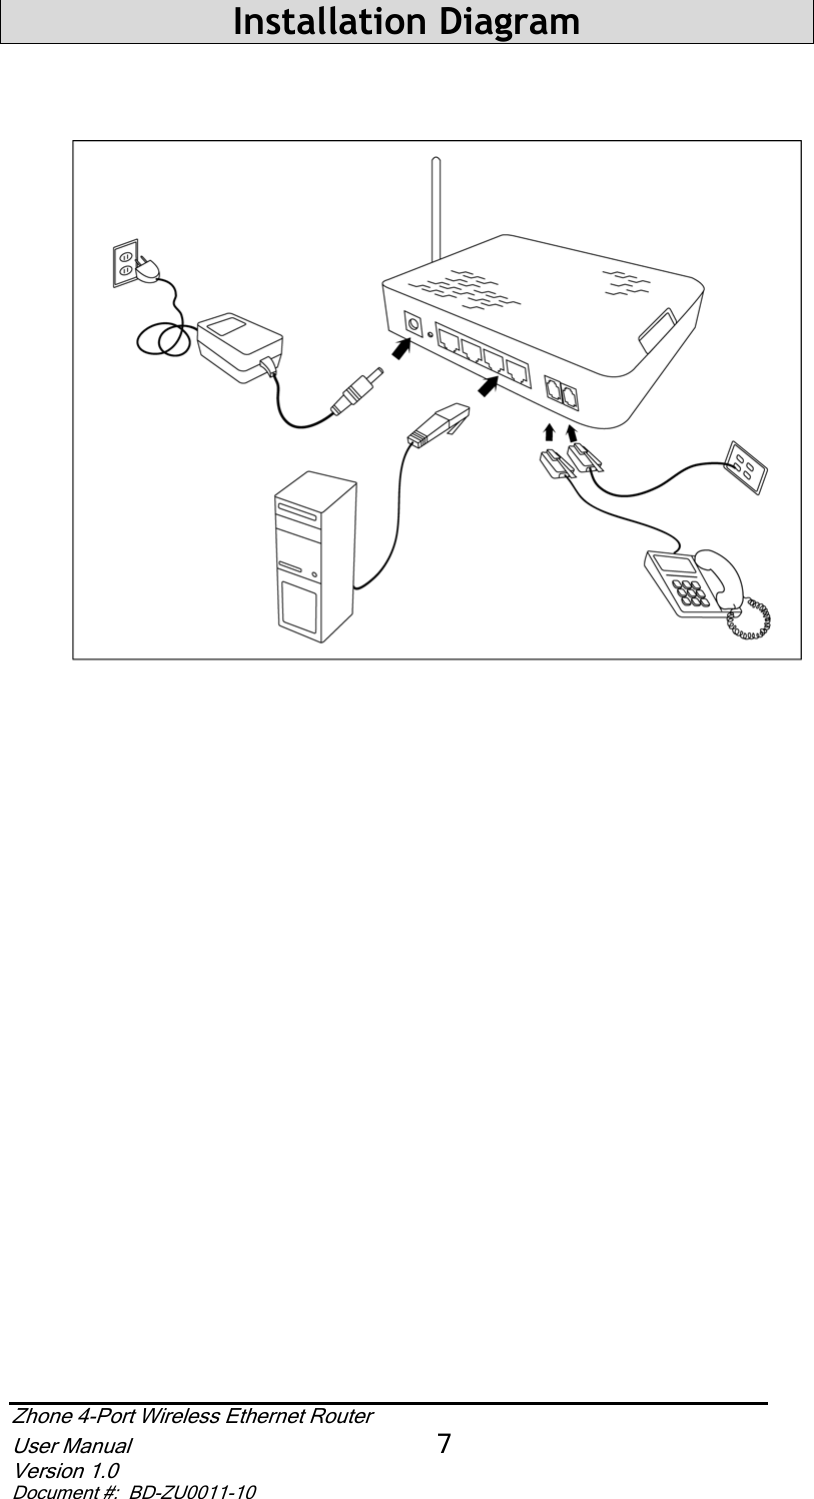 Installation Diagram Zhone 4-Port Wireless Ethernet Router User Manual 7Version 1.0 Document #:  BD-ZU0011-10